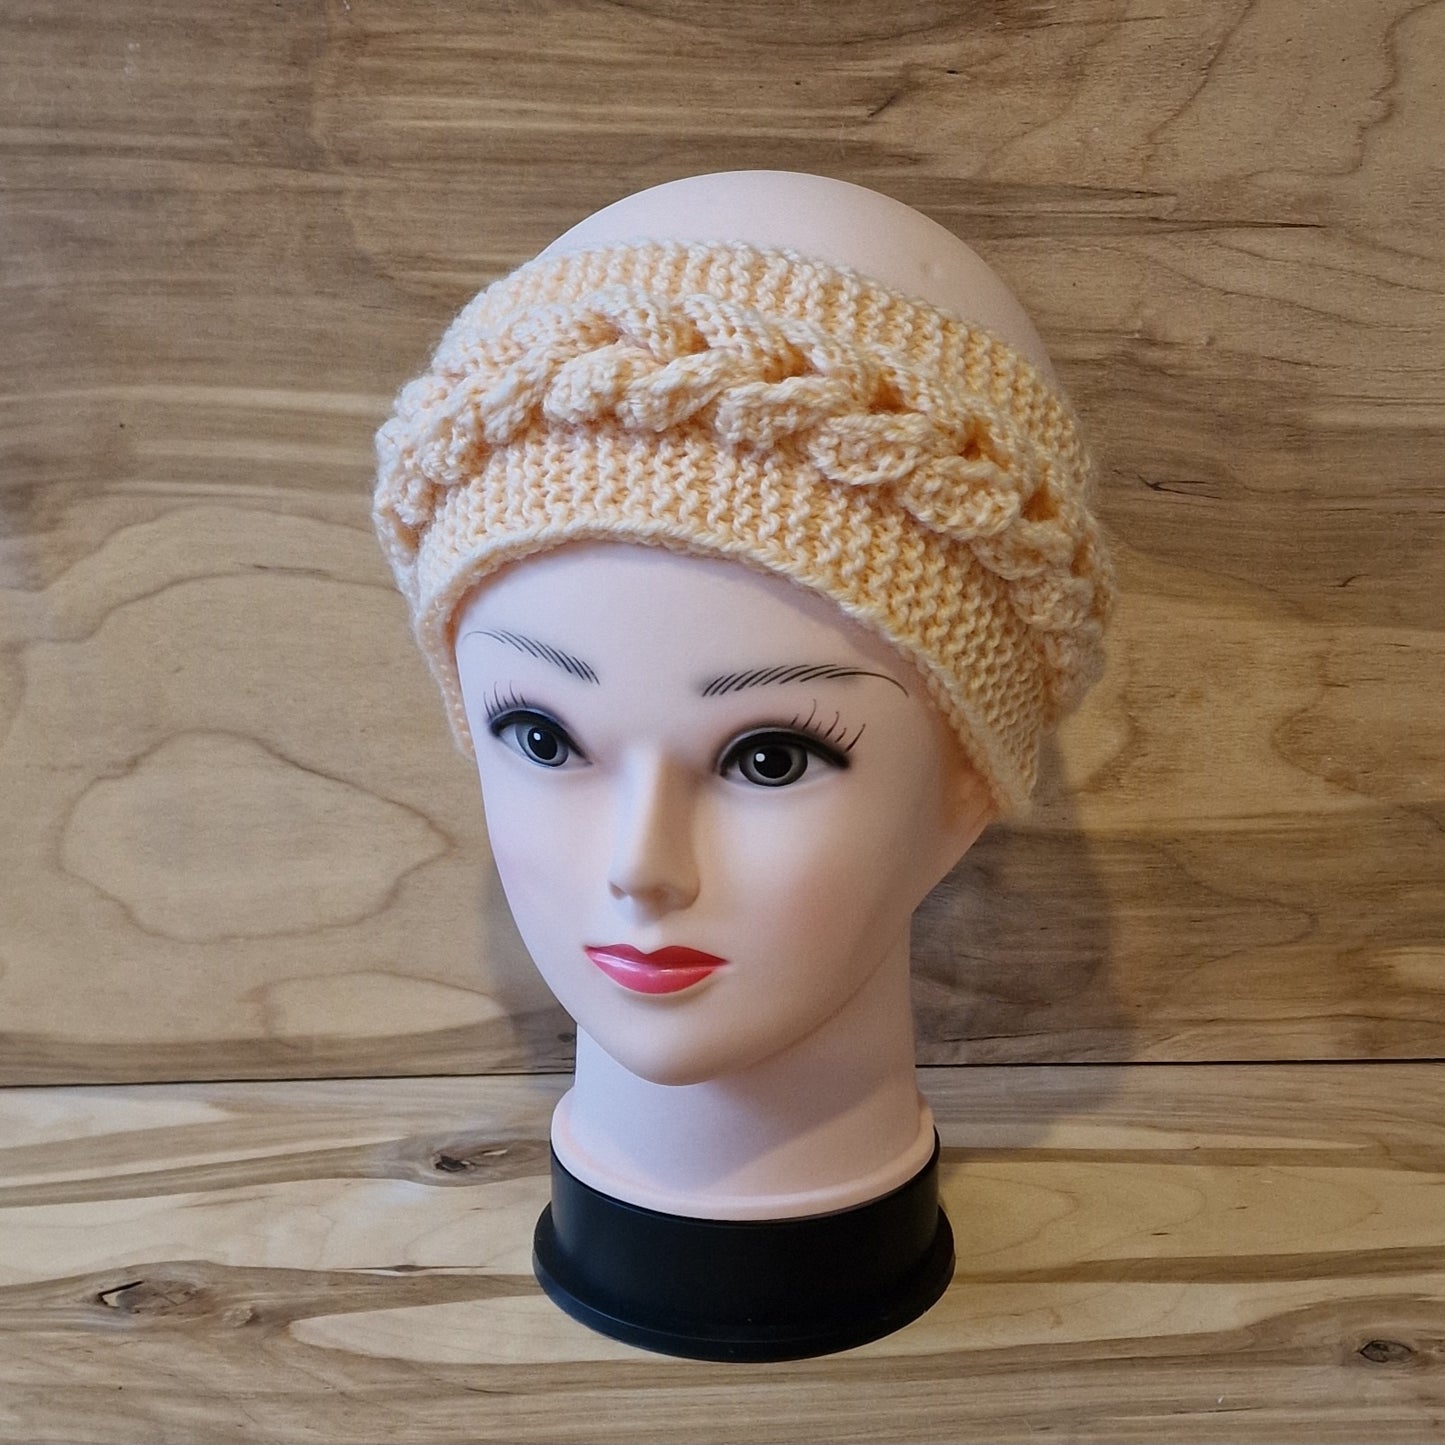 Flesh colored yarn headband (ANMI 18)